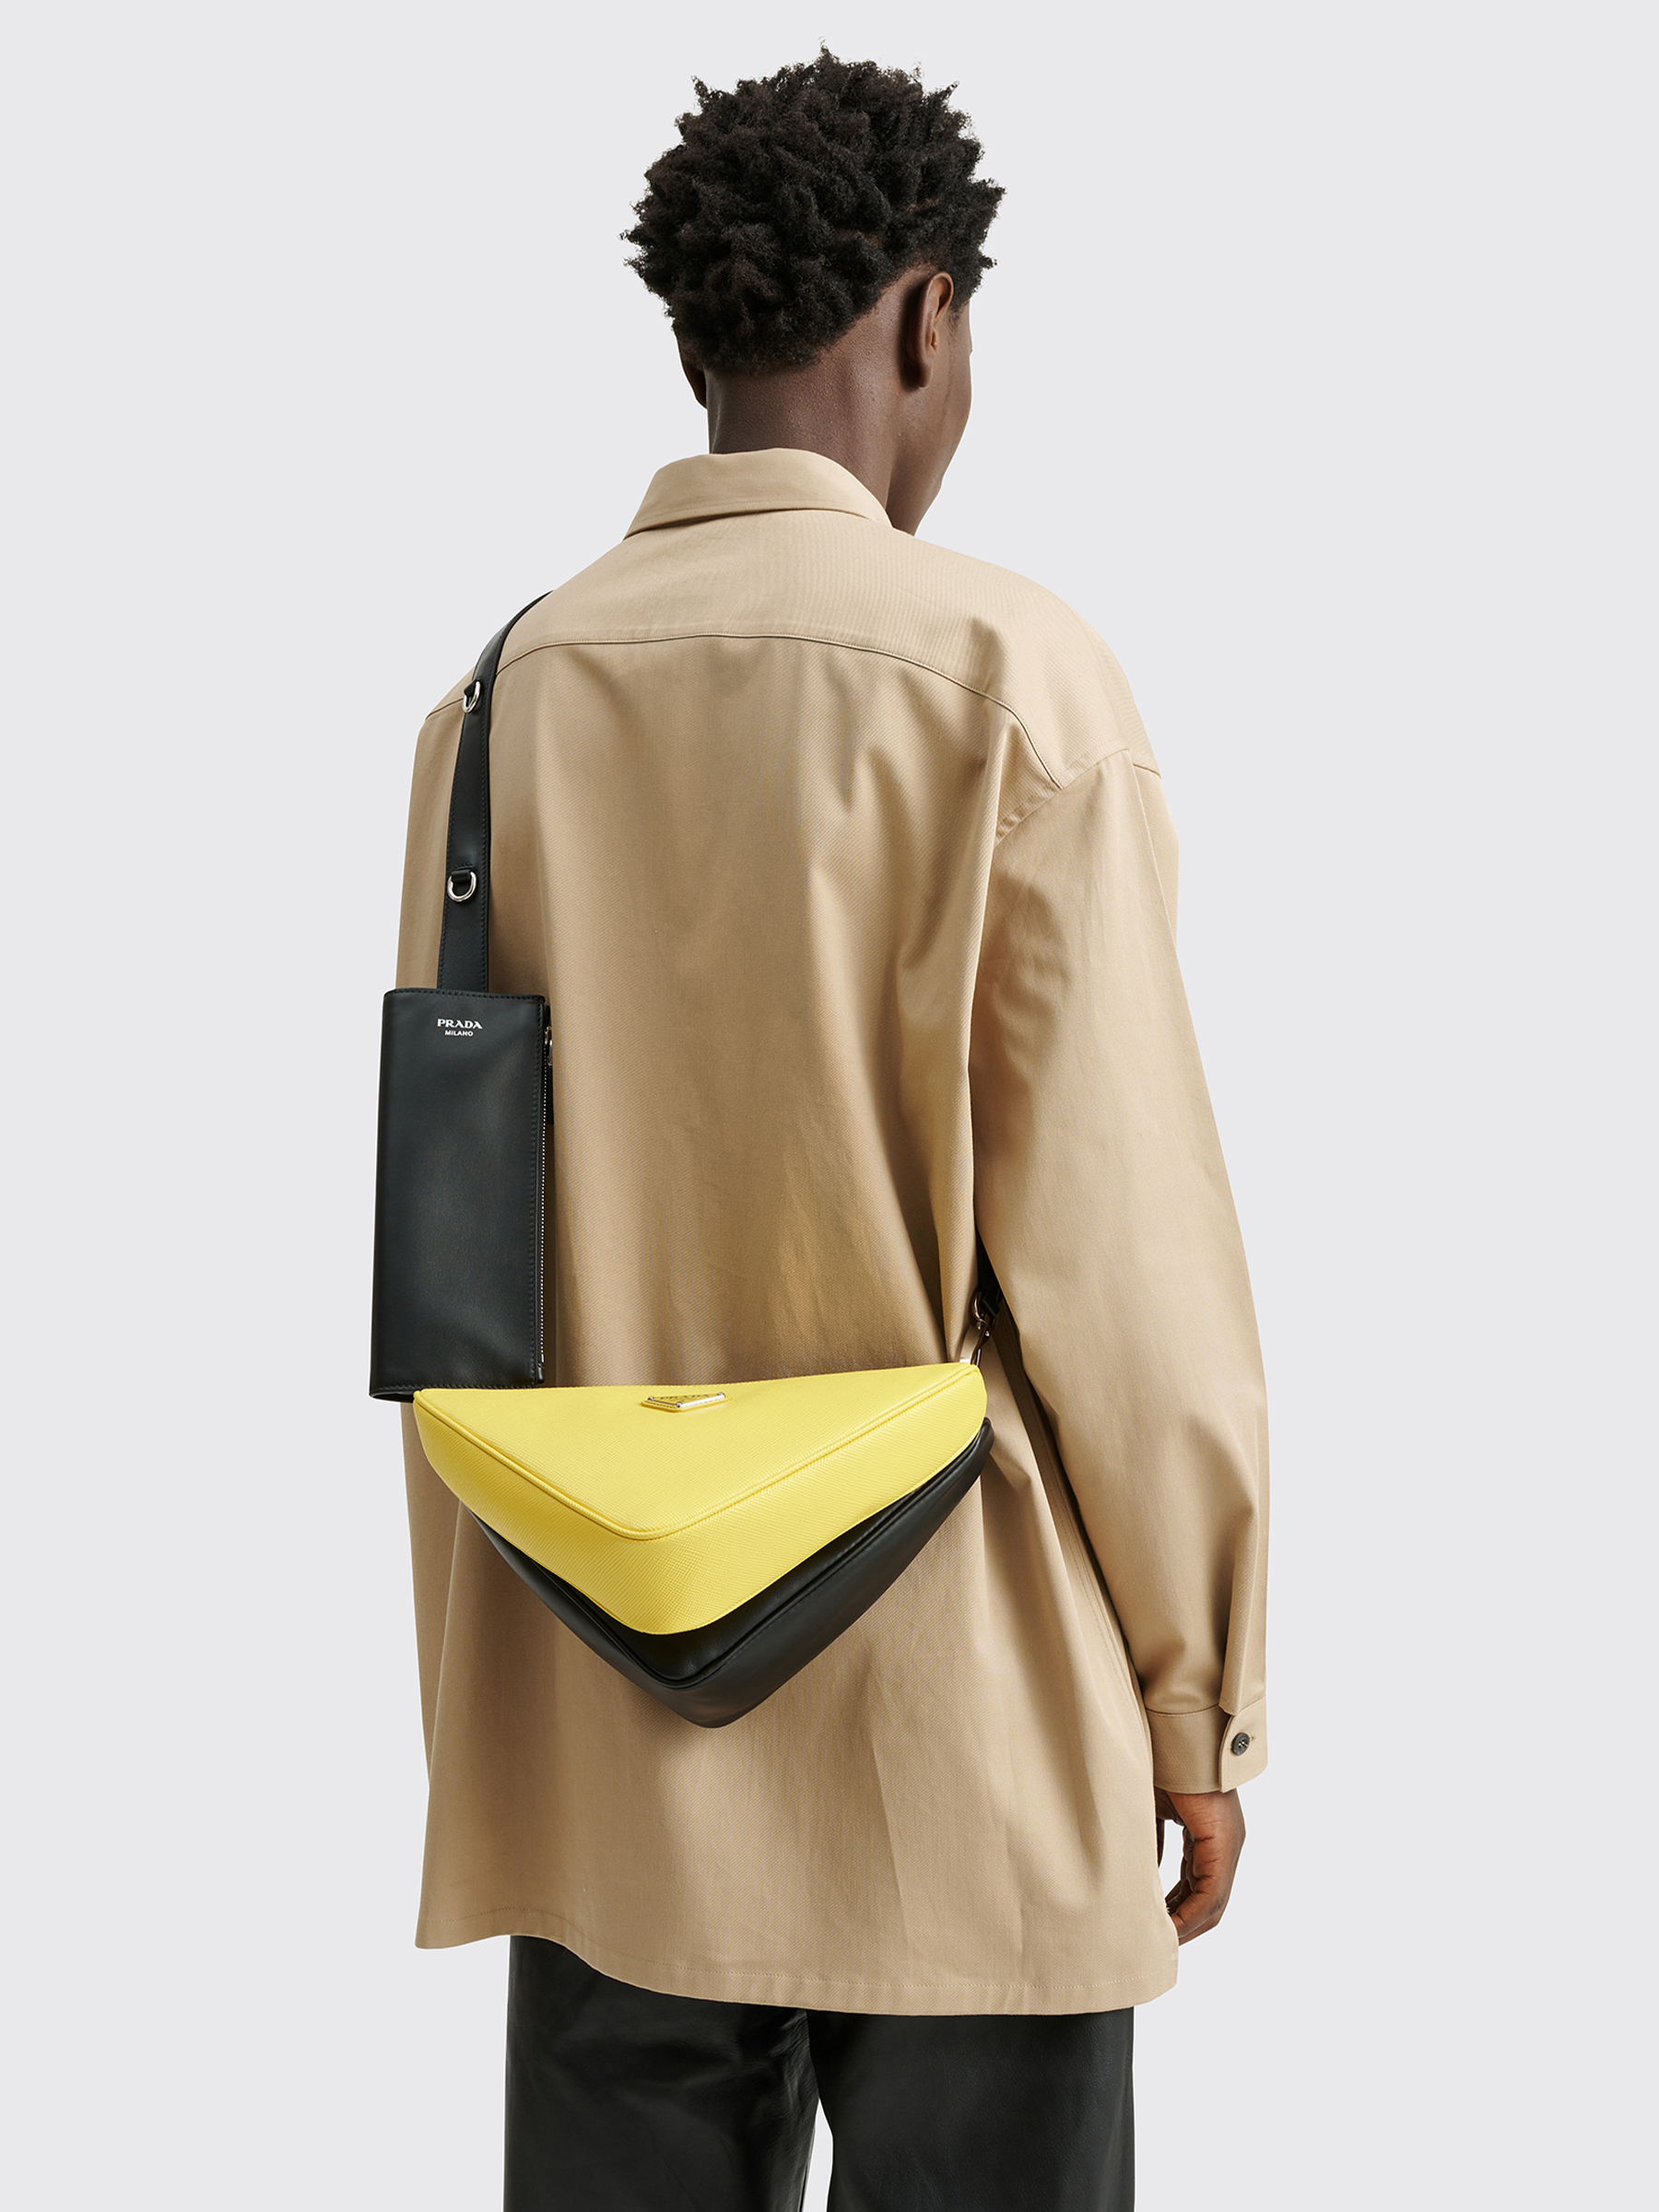 Très Bien - Prada Triangle Leather Shoulder Double Bag Black / Sunny Yellow